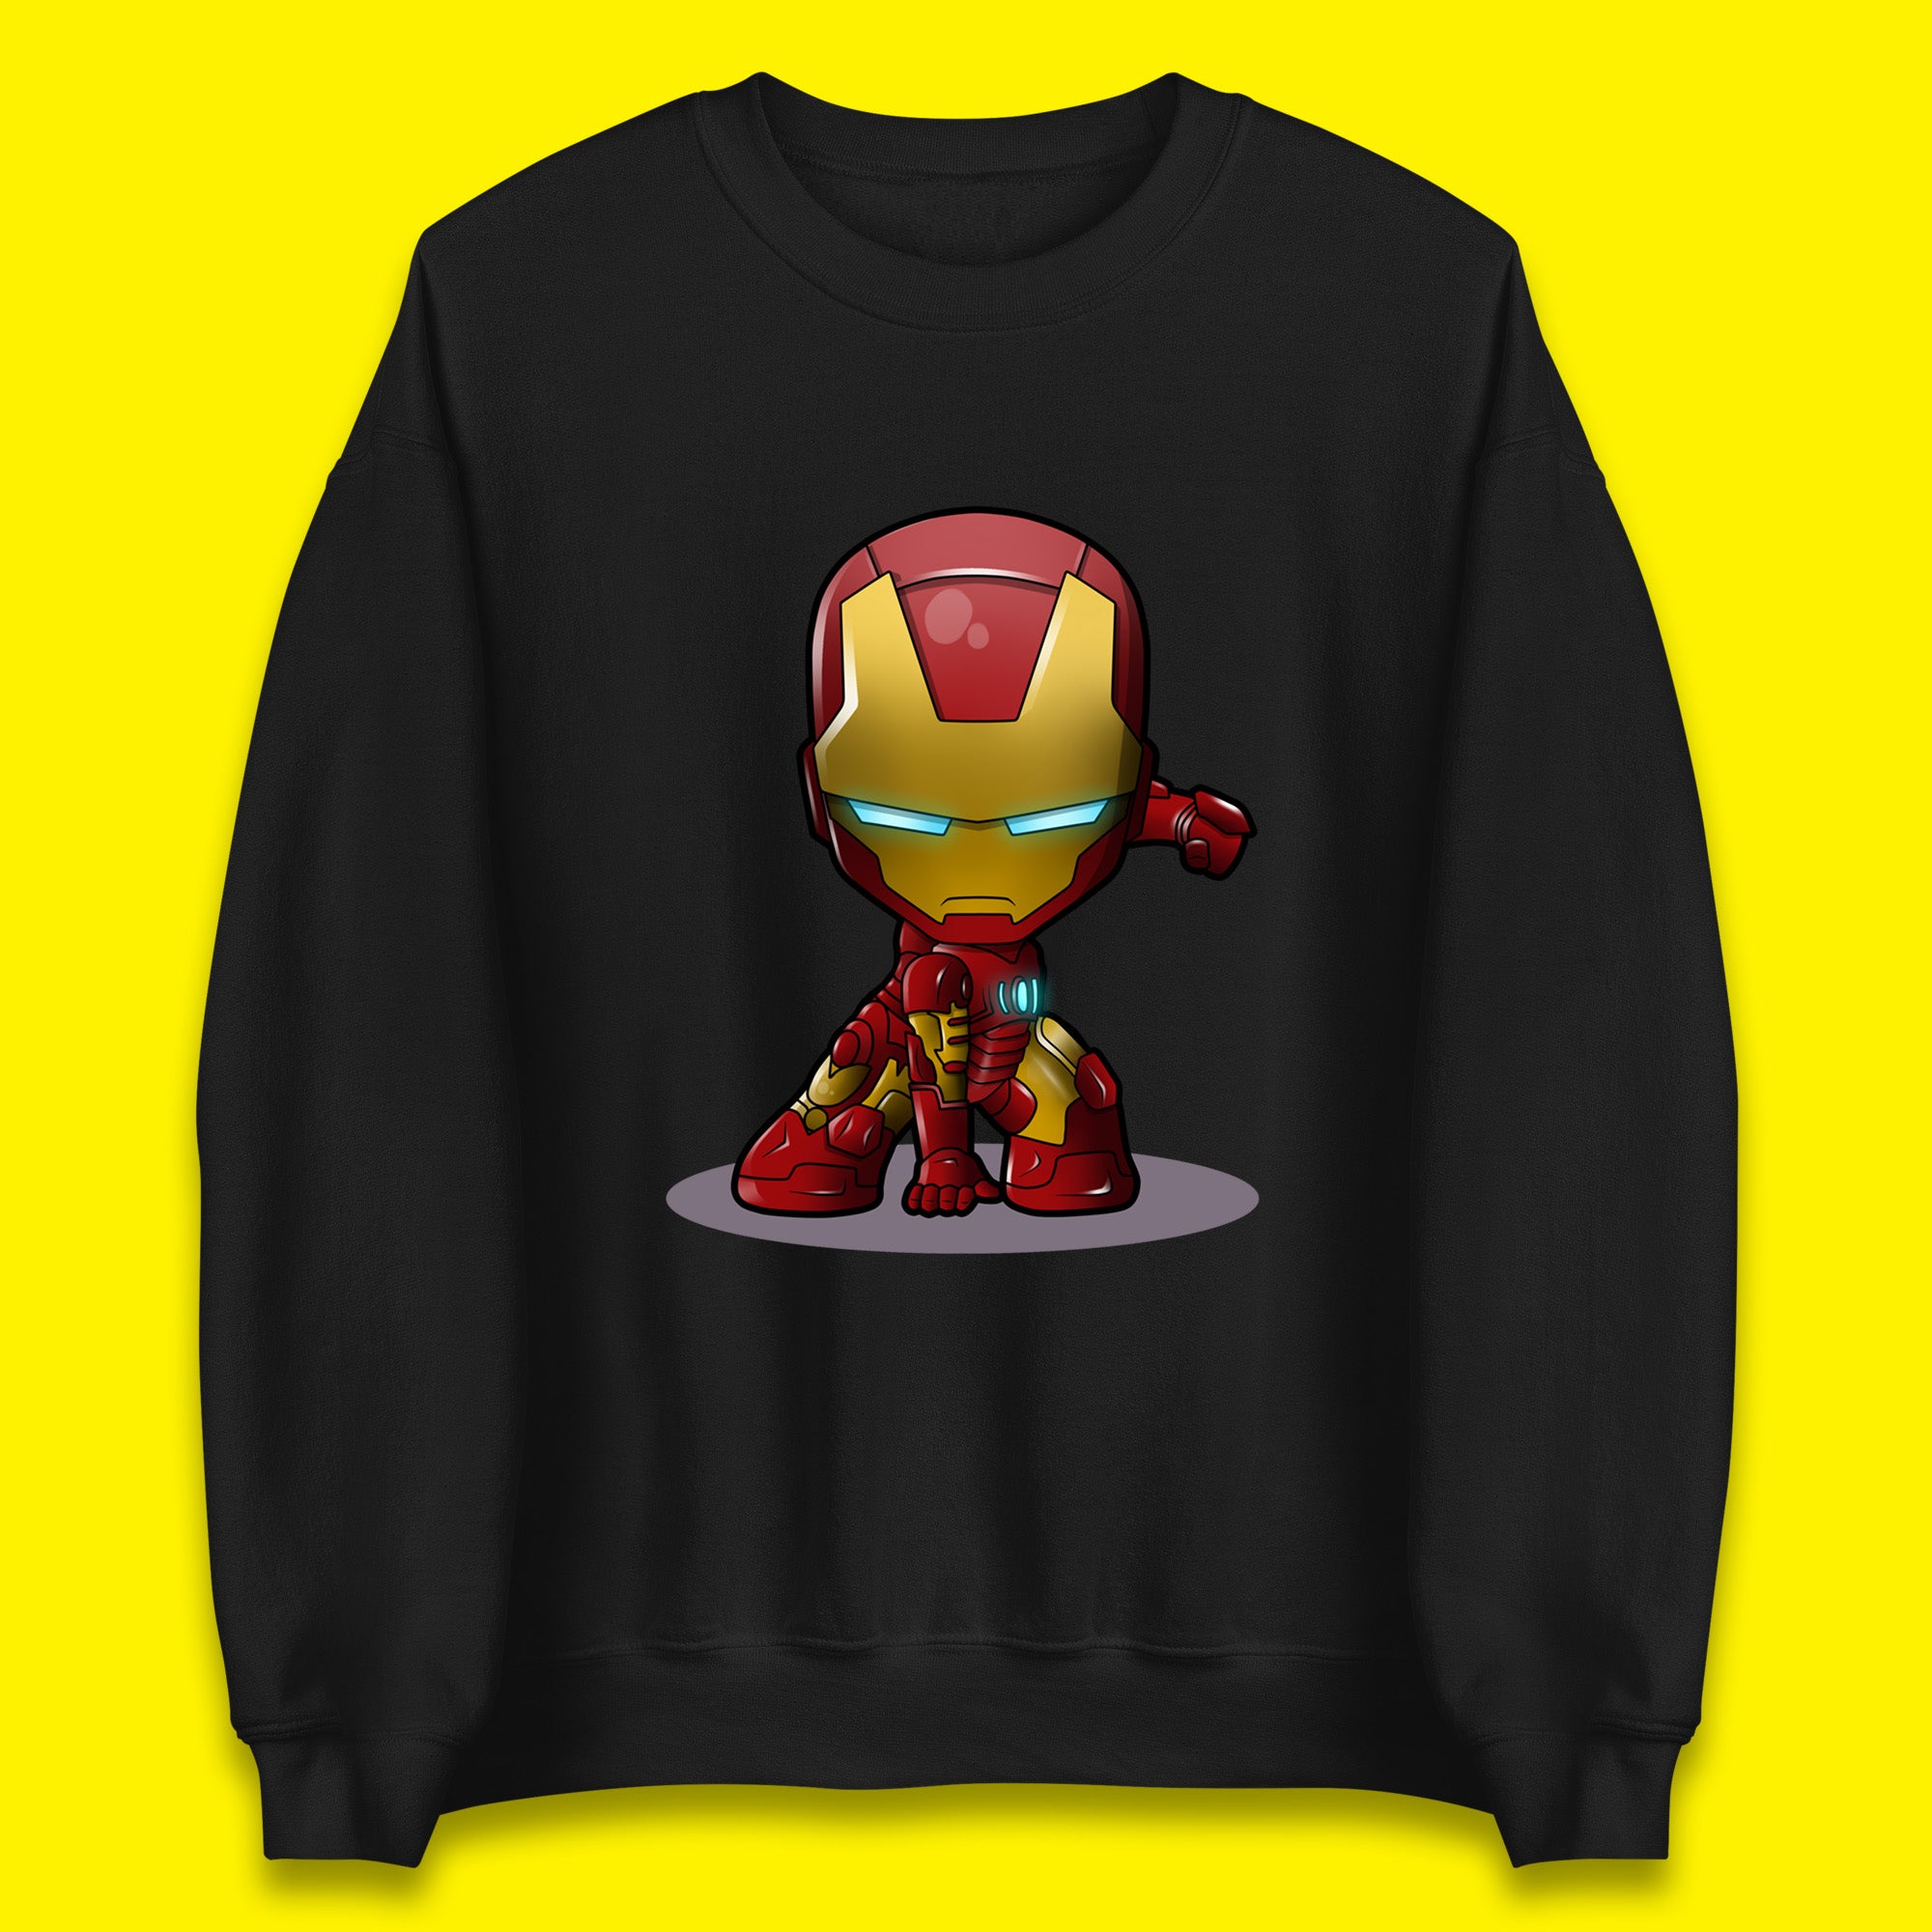 Marvel Avenger Iron Man Movie Character Ironman Costume Superhero Marvel Comics Unisex Sweatshirt